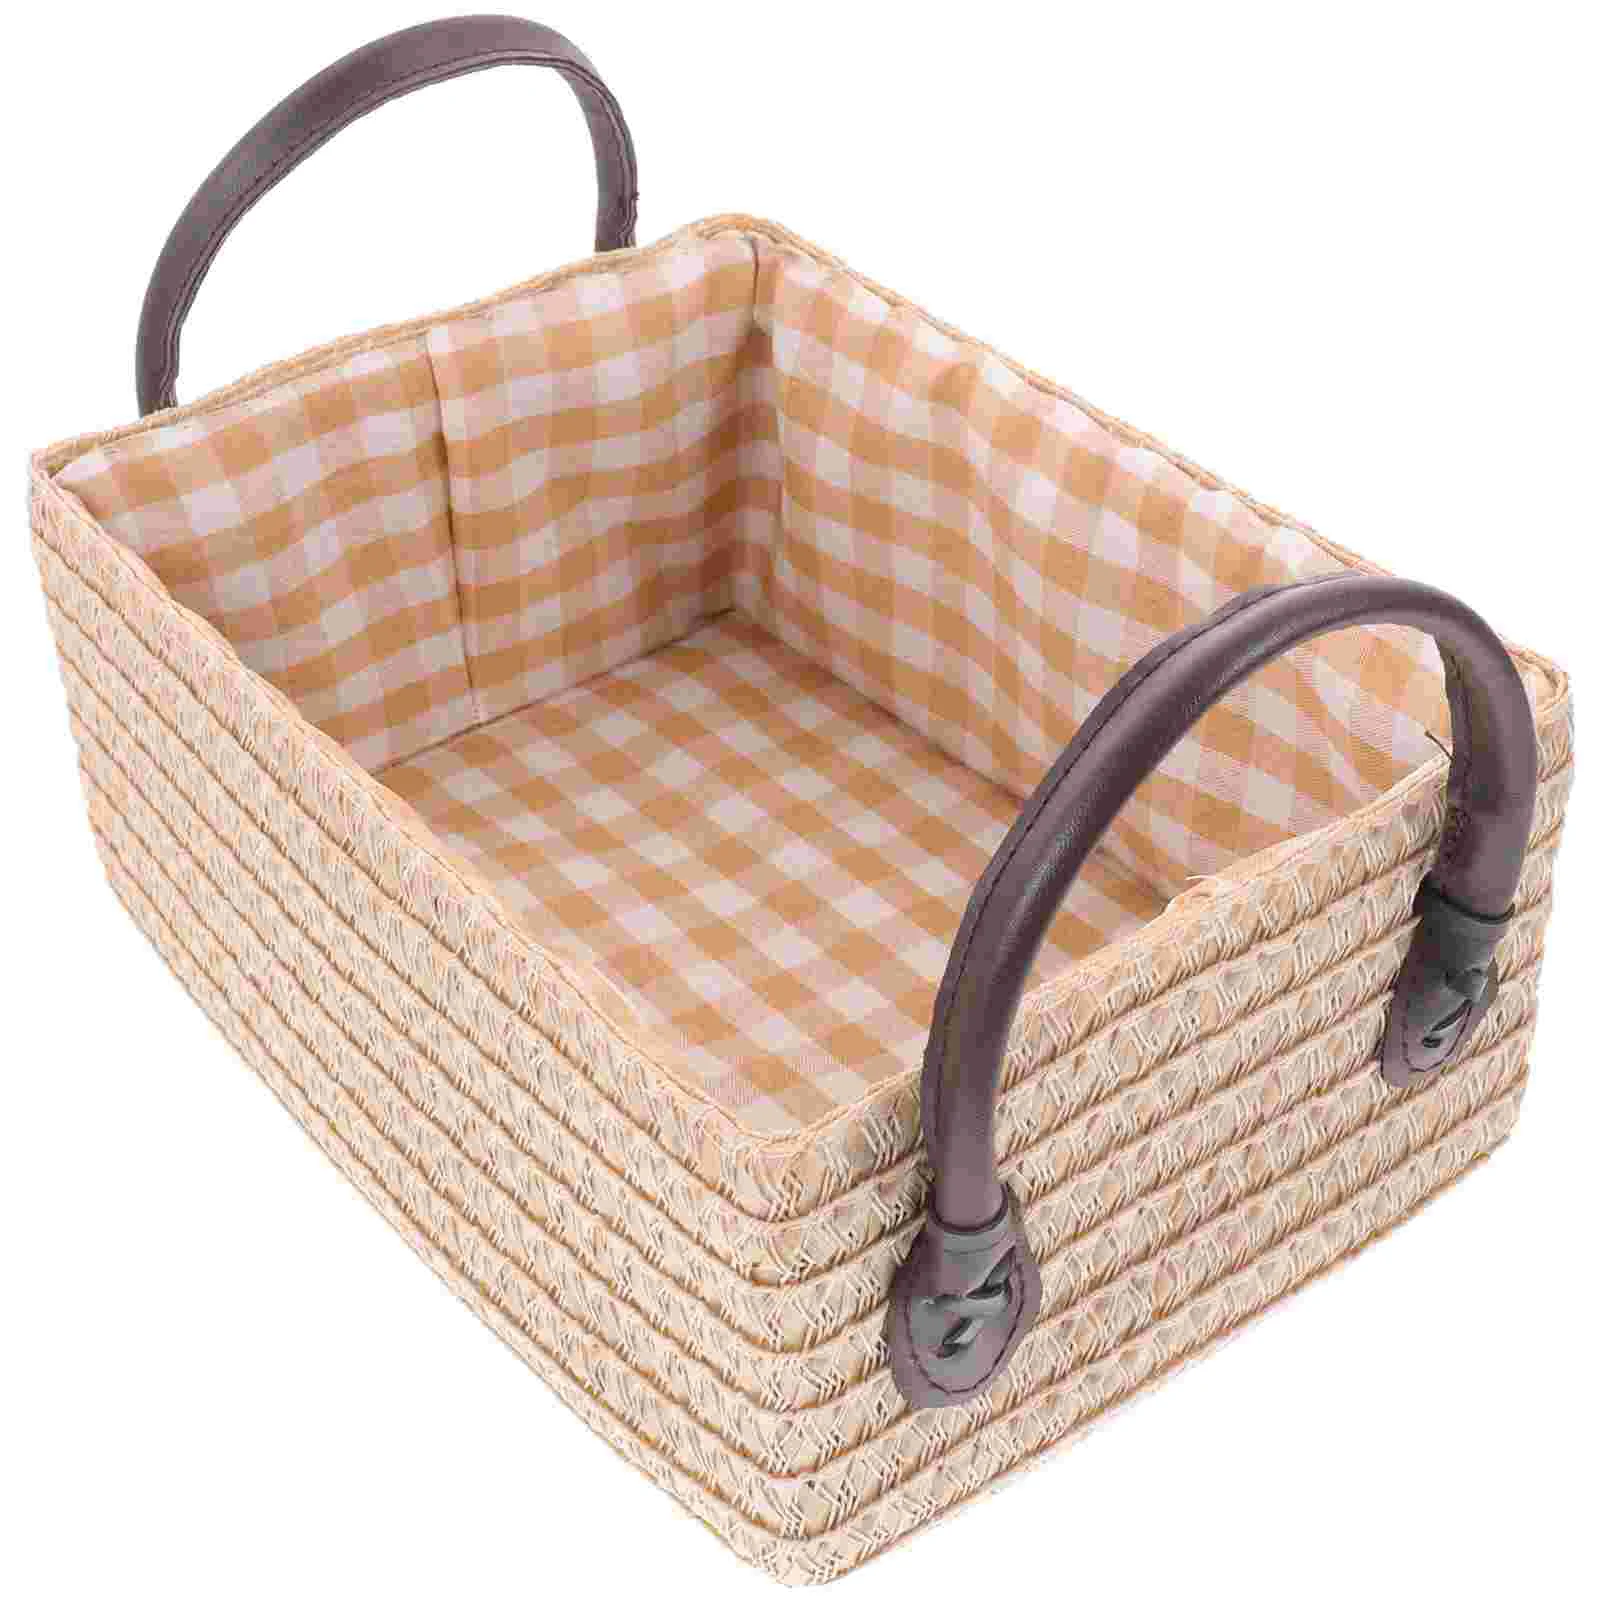 

Basket Storage Baskets Organizer Woven Bin Hamper Clothes Rope Laundry Nursery Closet Boxes Organizing Shelf Toy Baby Cotton